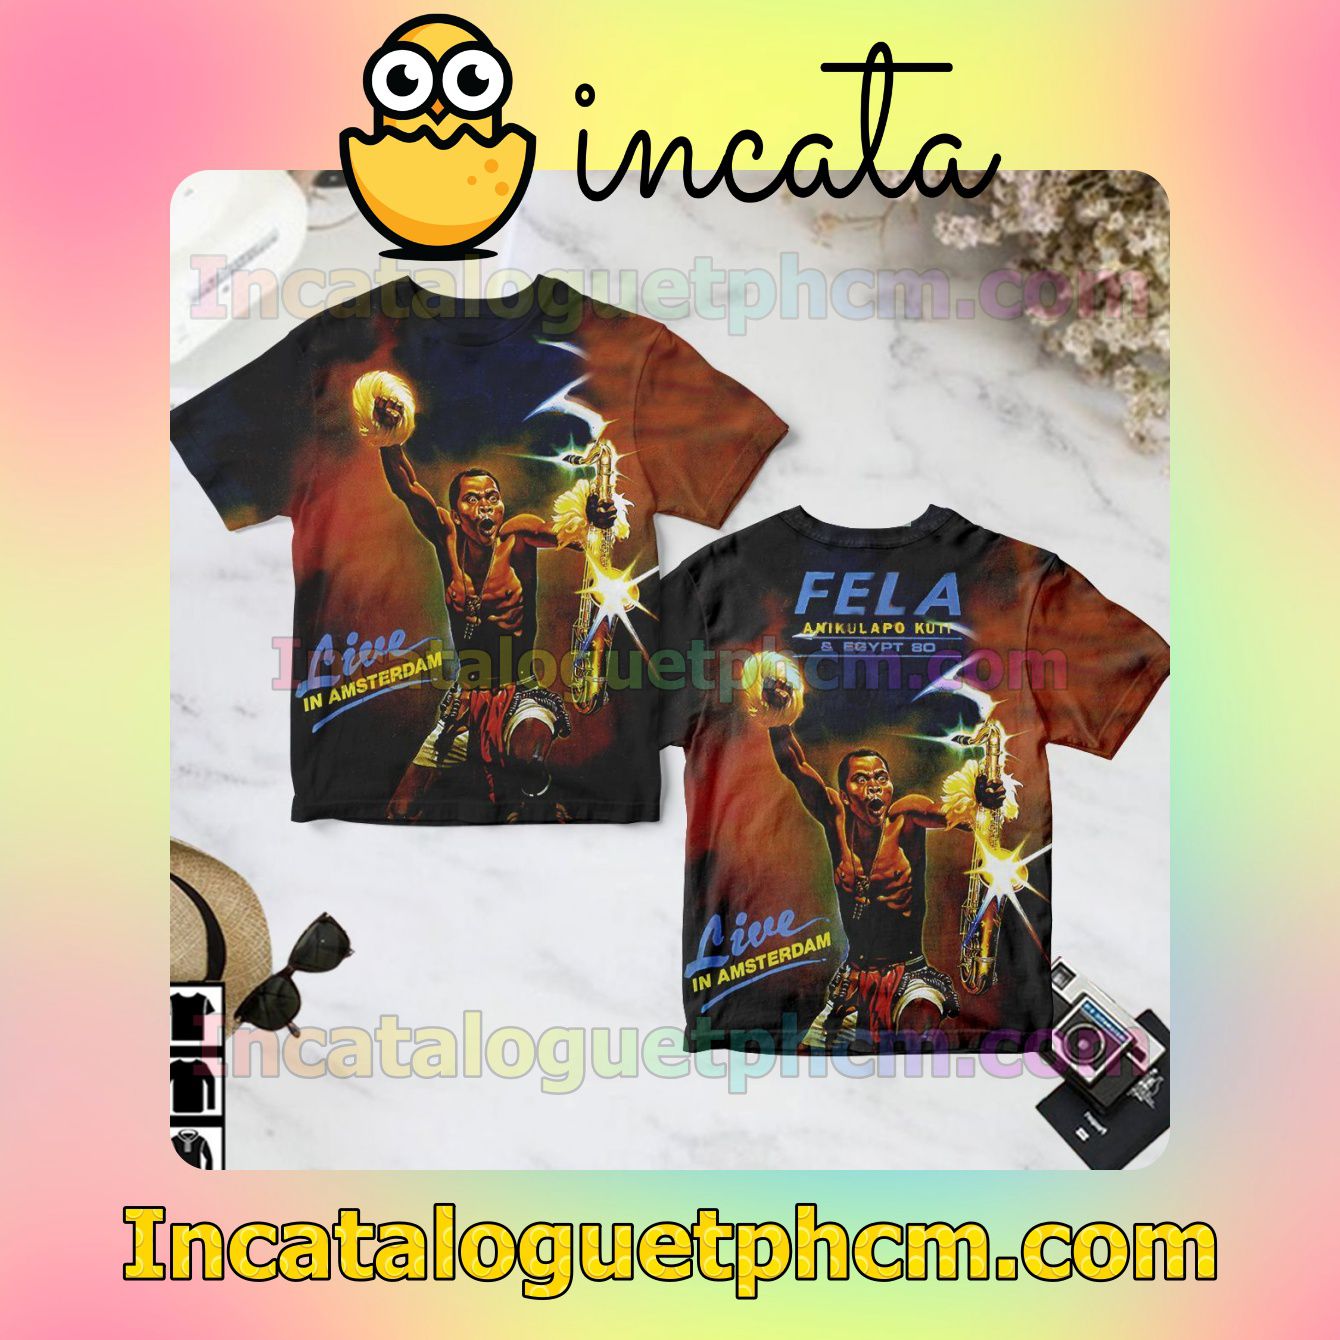 Fela Kuti And Egypt 80 Live In Amsterdam Gift Shirt